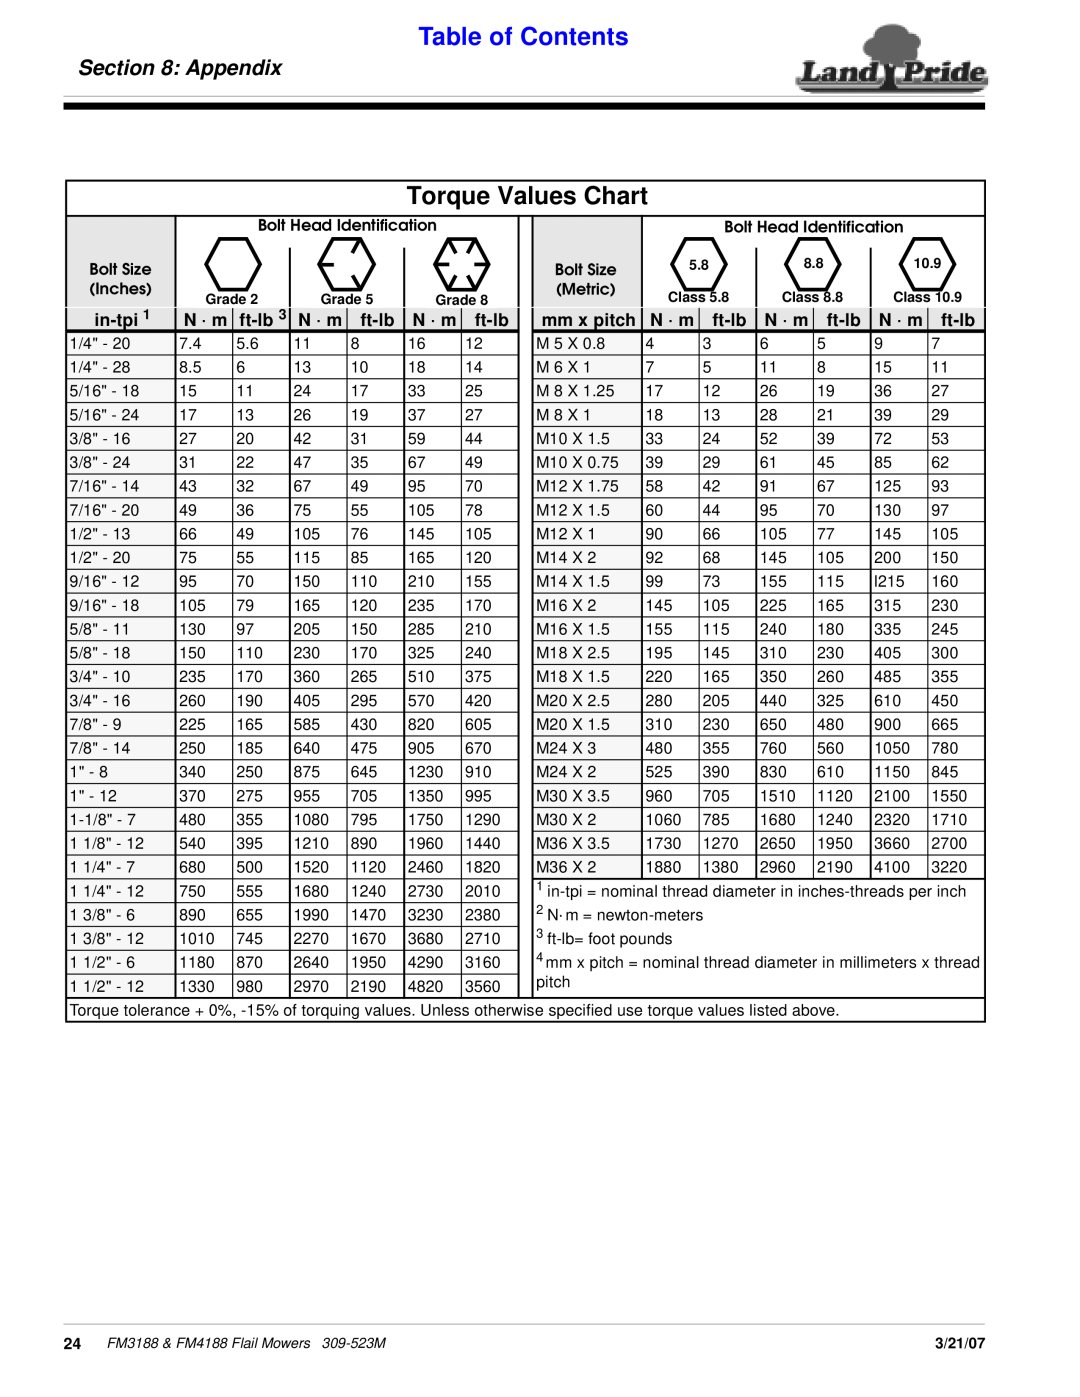 Land Pride FM4188, FM3188 manual Torque Values Chart, Appendix, Table of Contents, in-tpi, N · m, ft-lb, mm x pitch 